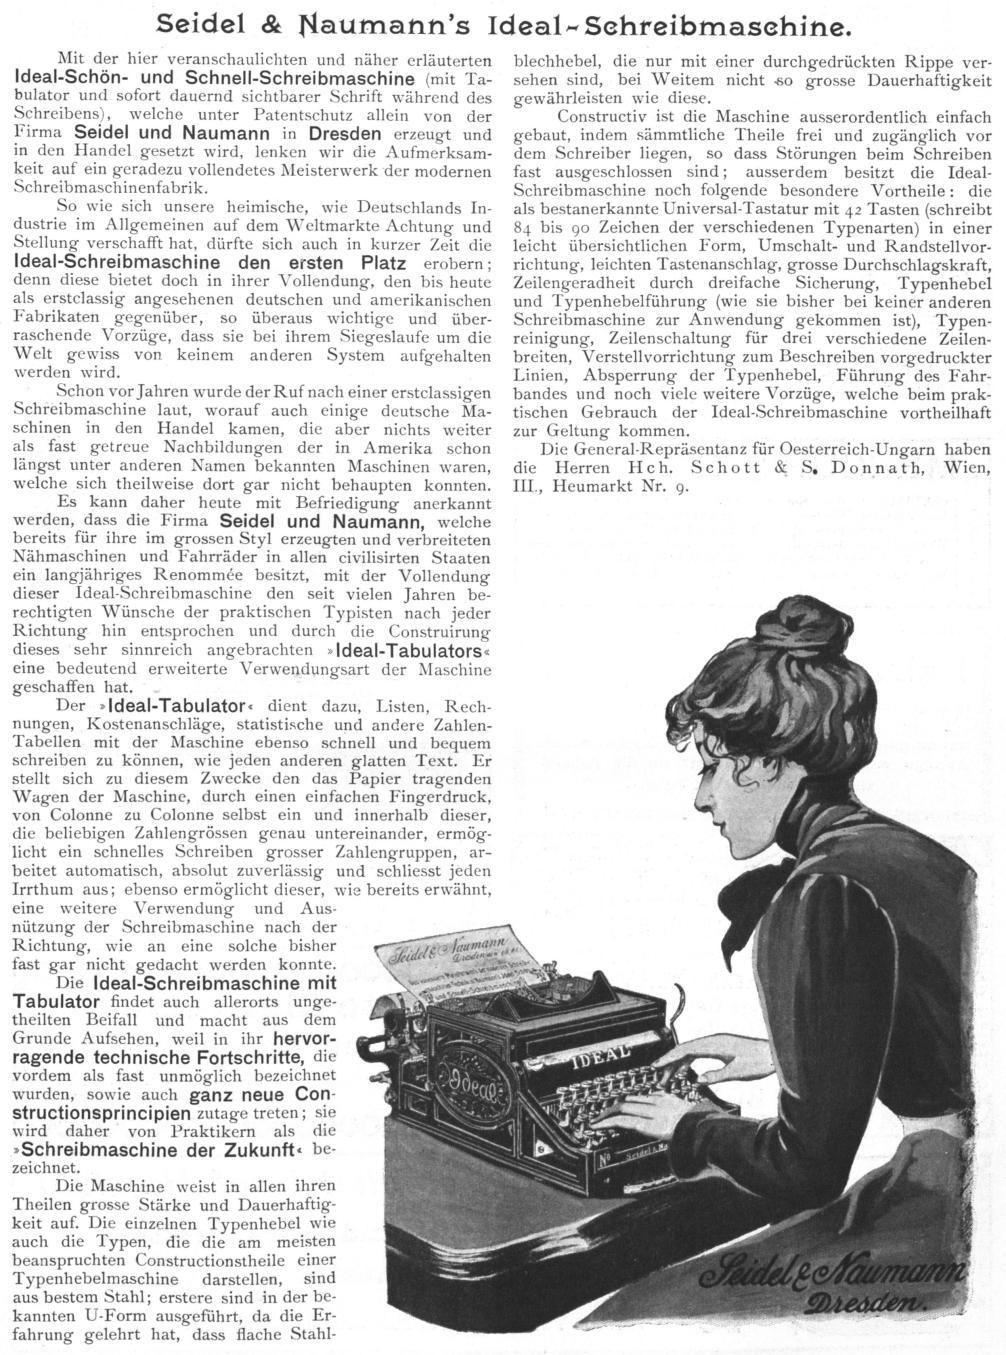 『Sport & Salon』1902年5月3日号